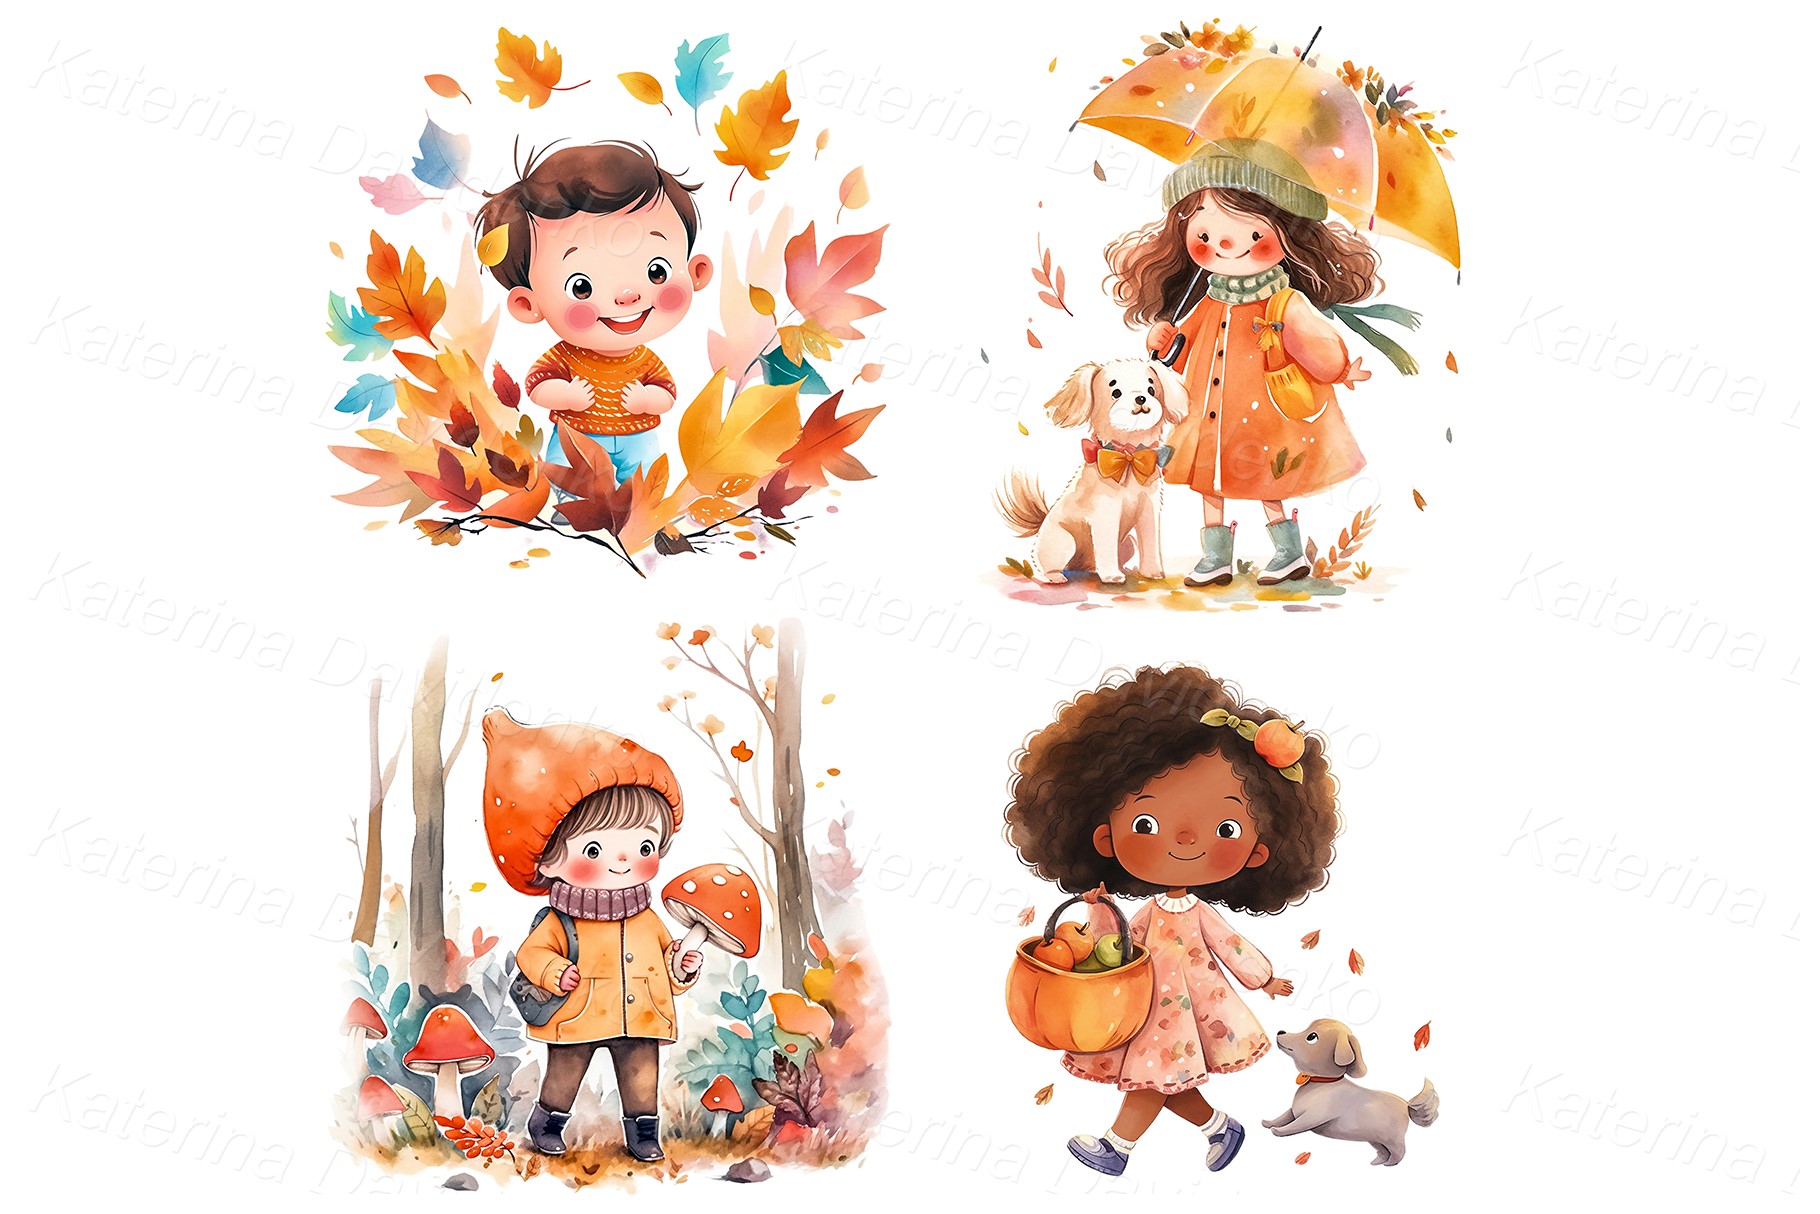 Cute cartoon kids clipart. Watercolor set of autumn season PNG clipart, children outdoor activities